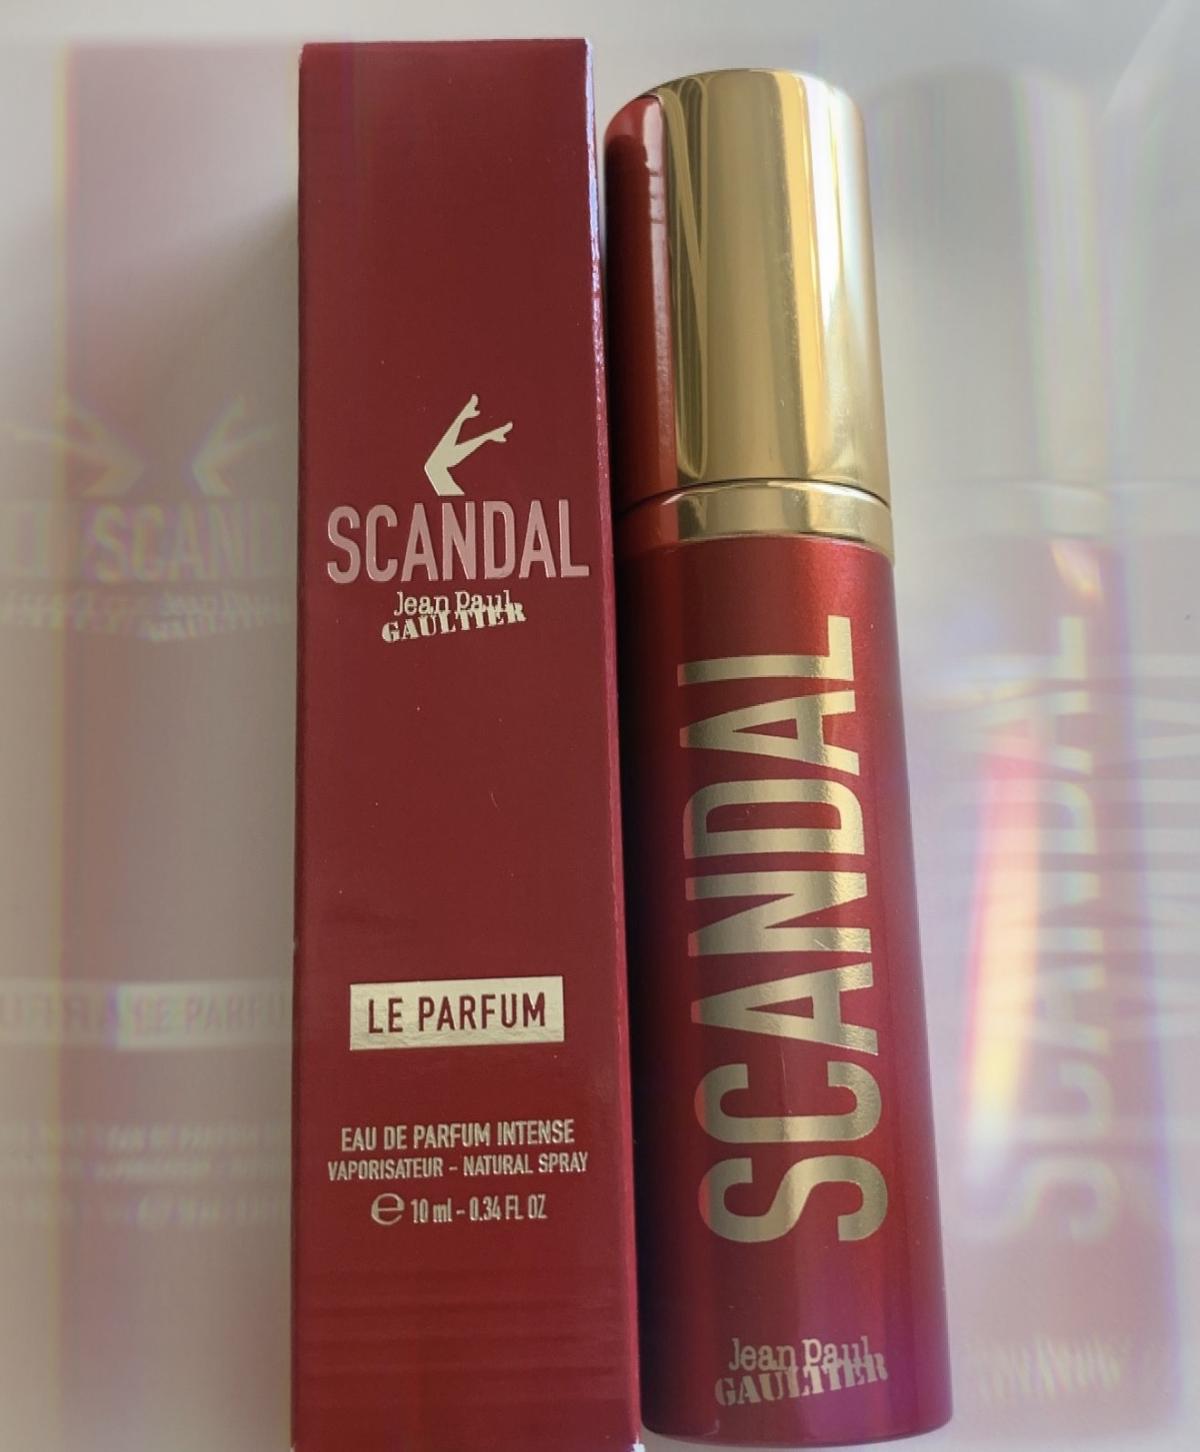 Scandal Le Parfum - Jean Paul Gaultier - Gallery 1